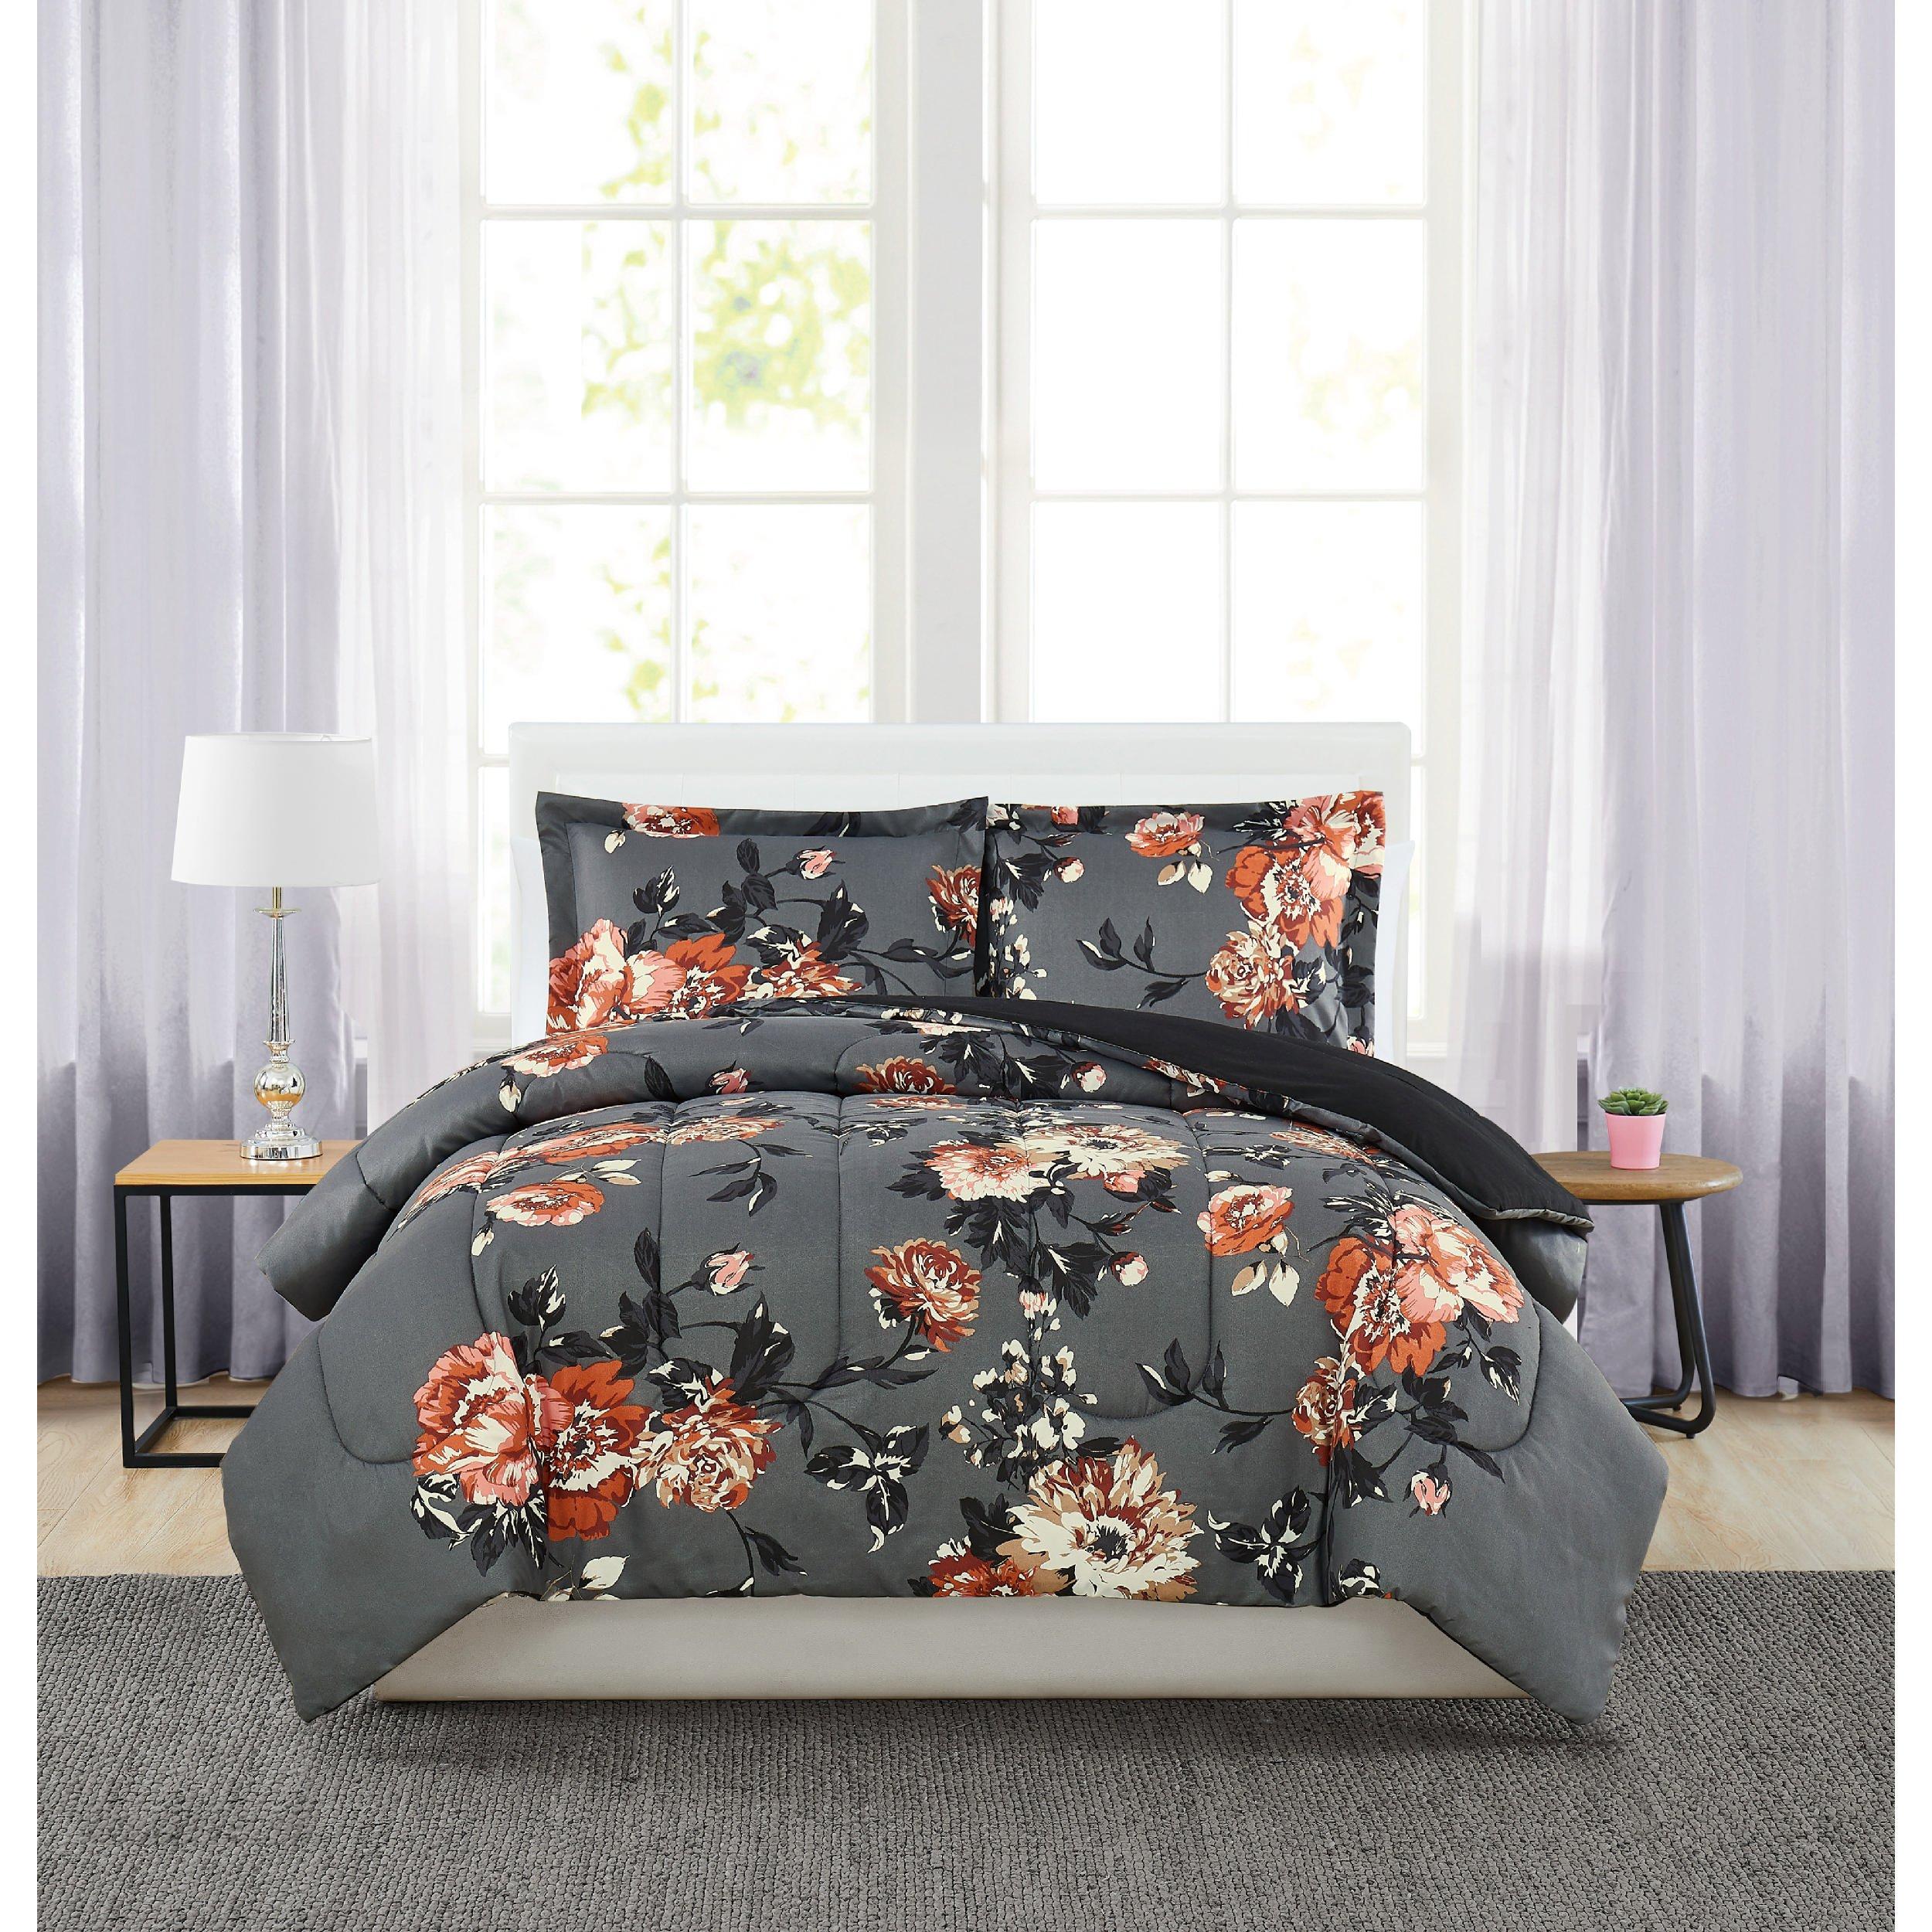 Manilla Floral Comforter Set